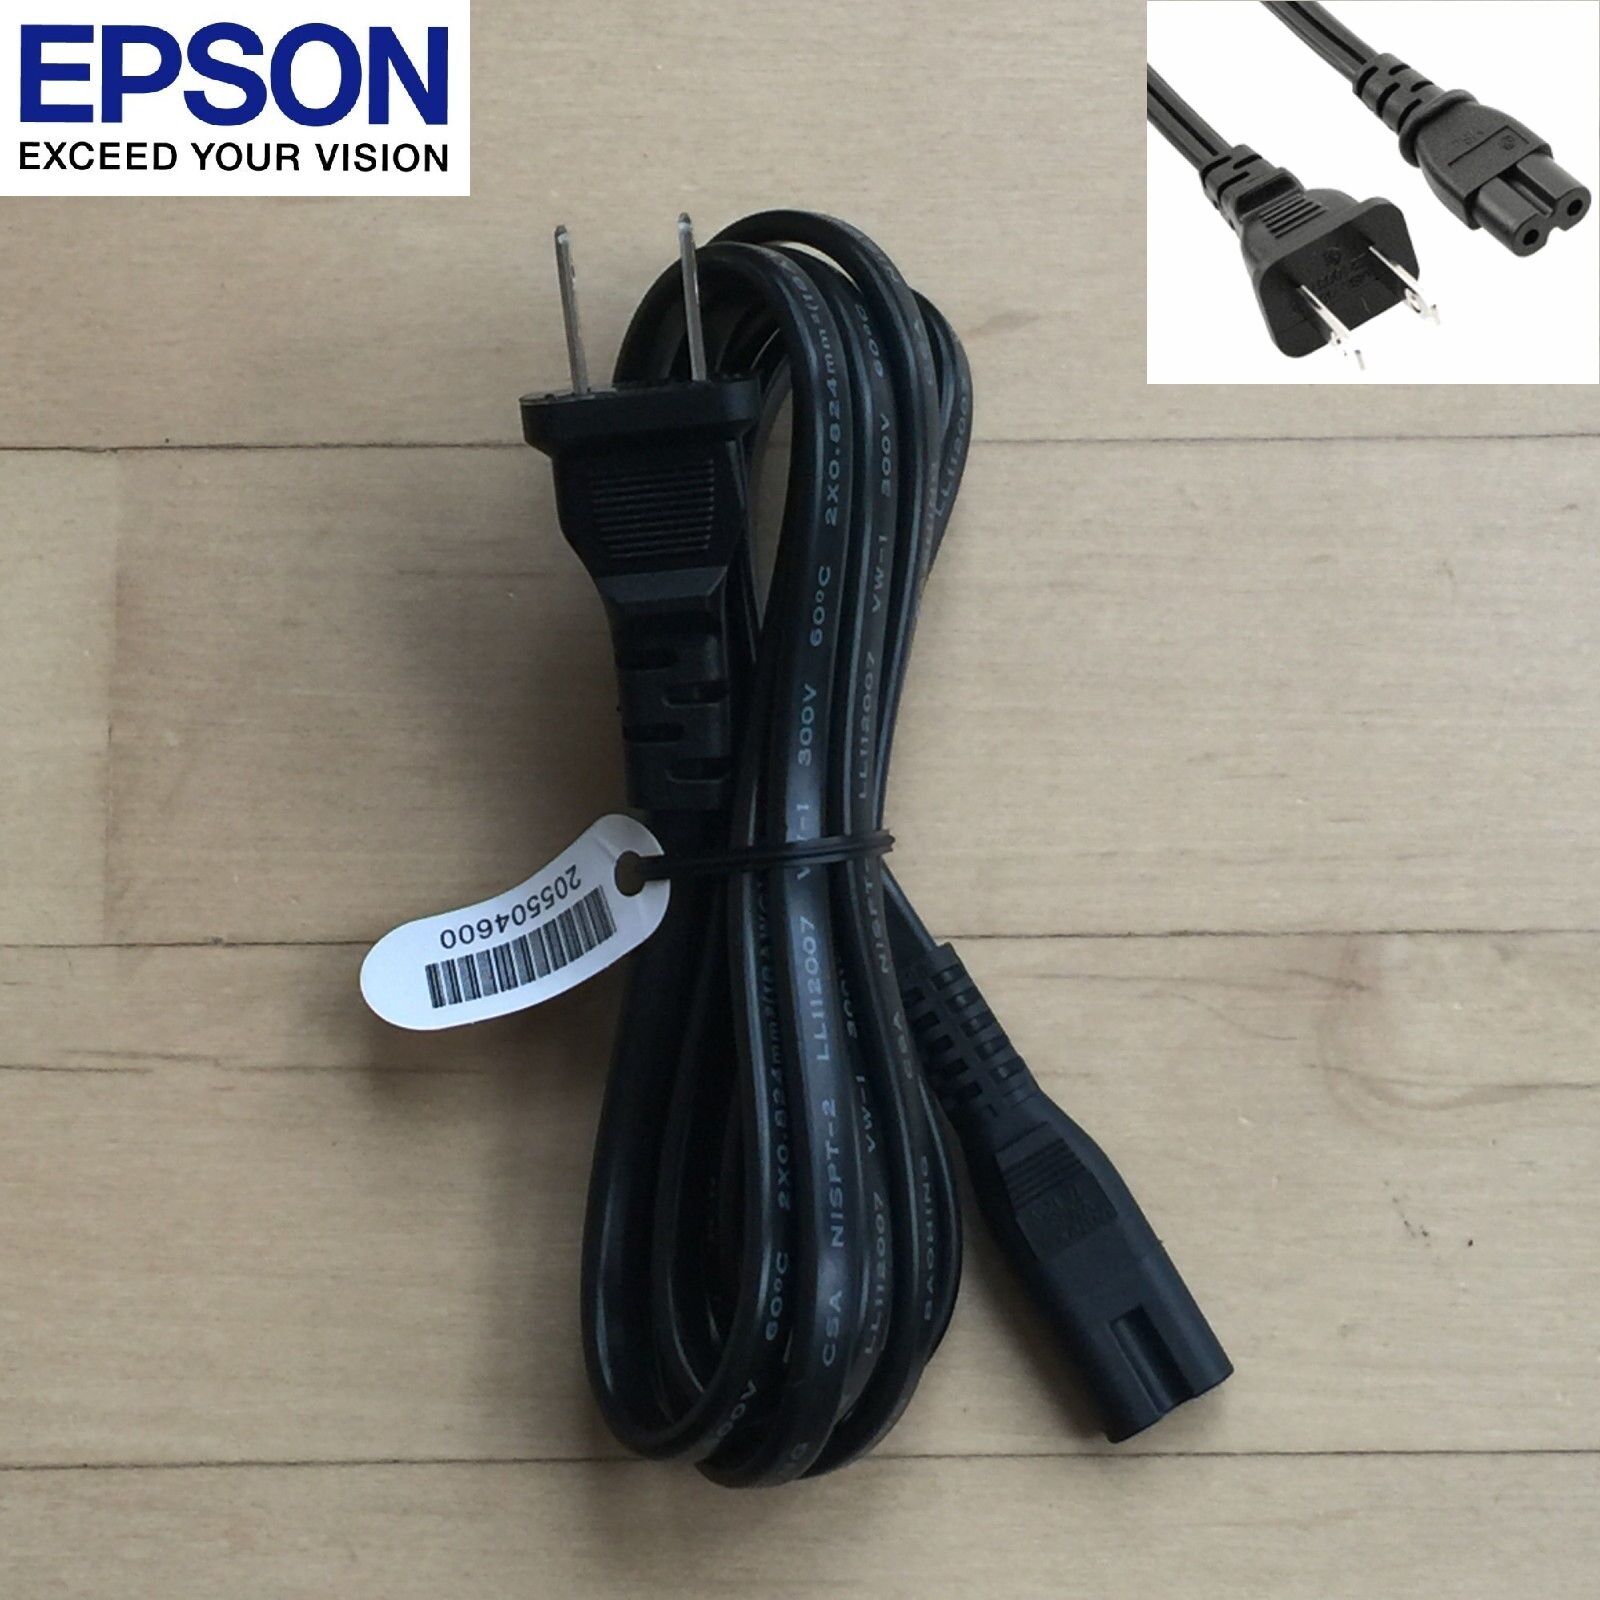 Original OEM Epson AC Power Cord XP430 XP440 XP4100 XP6000 XP6100 XP7100 ET 2760